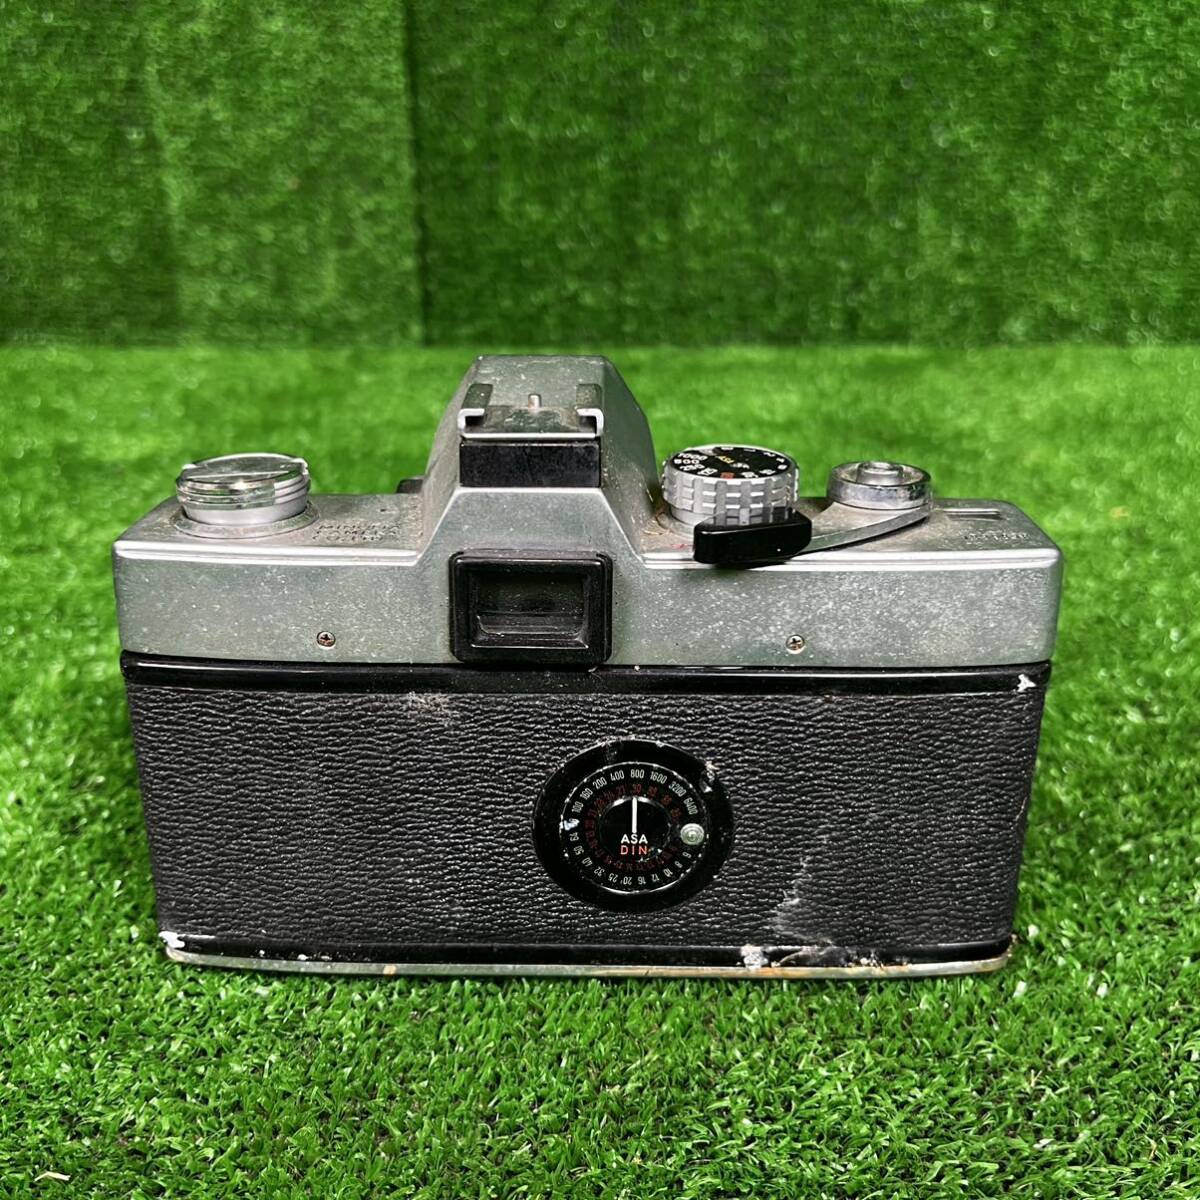 30 film camera single‐lens reflex camera together Canon Nikon Olympus MINOLTA